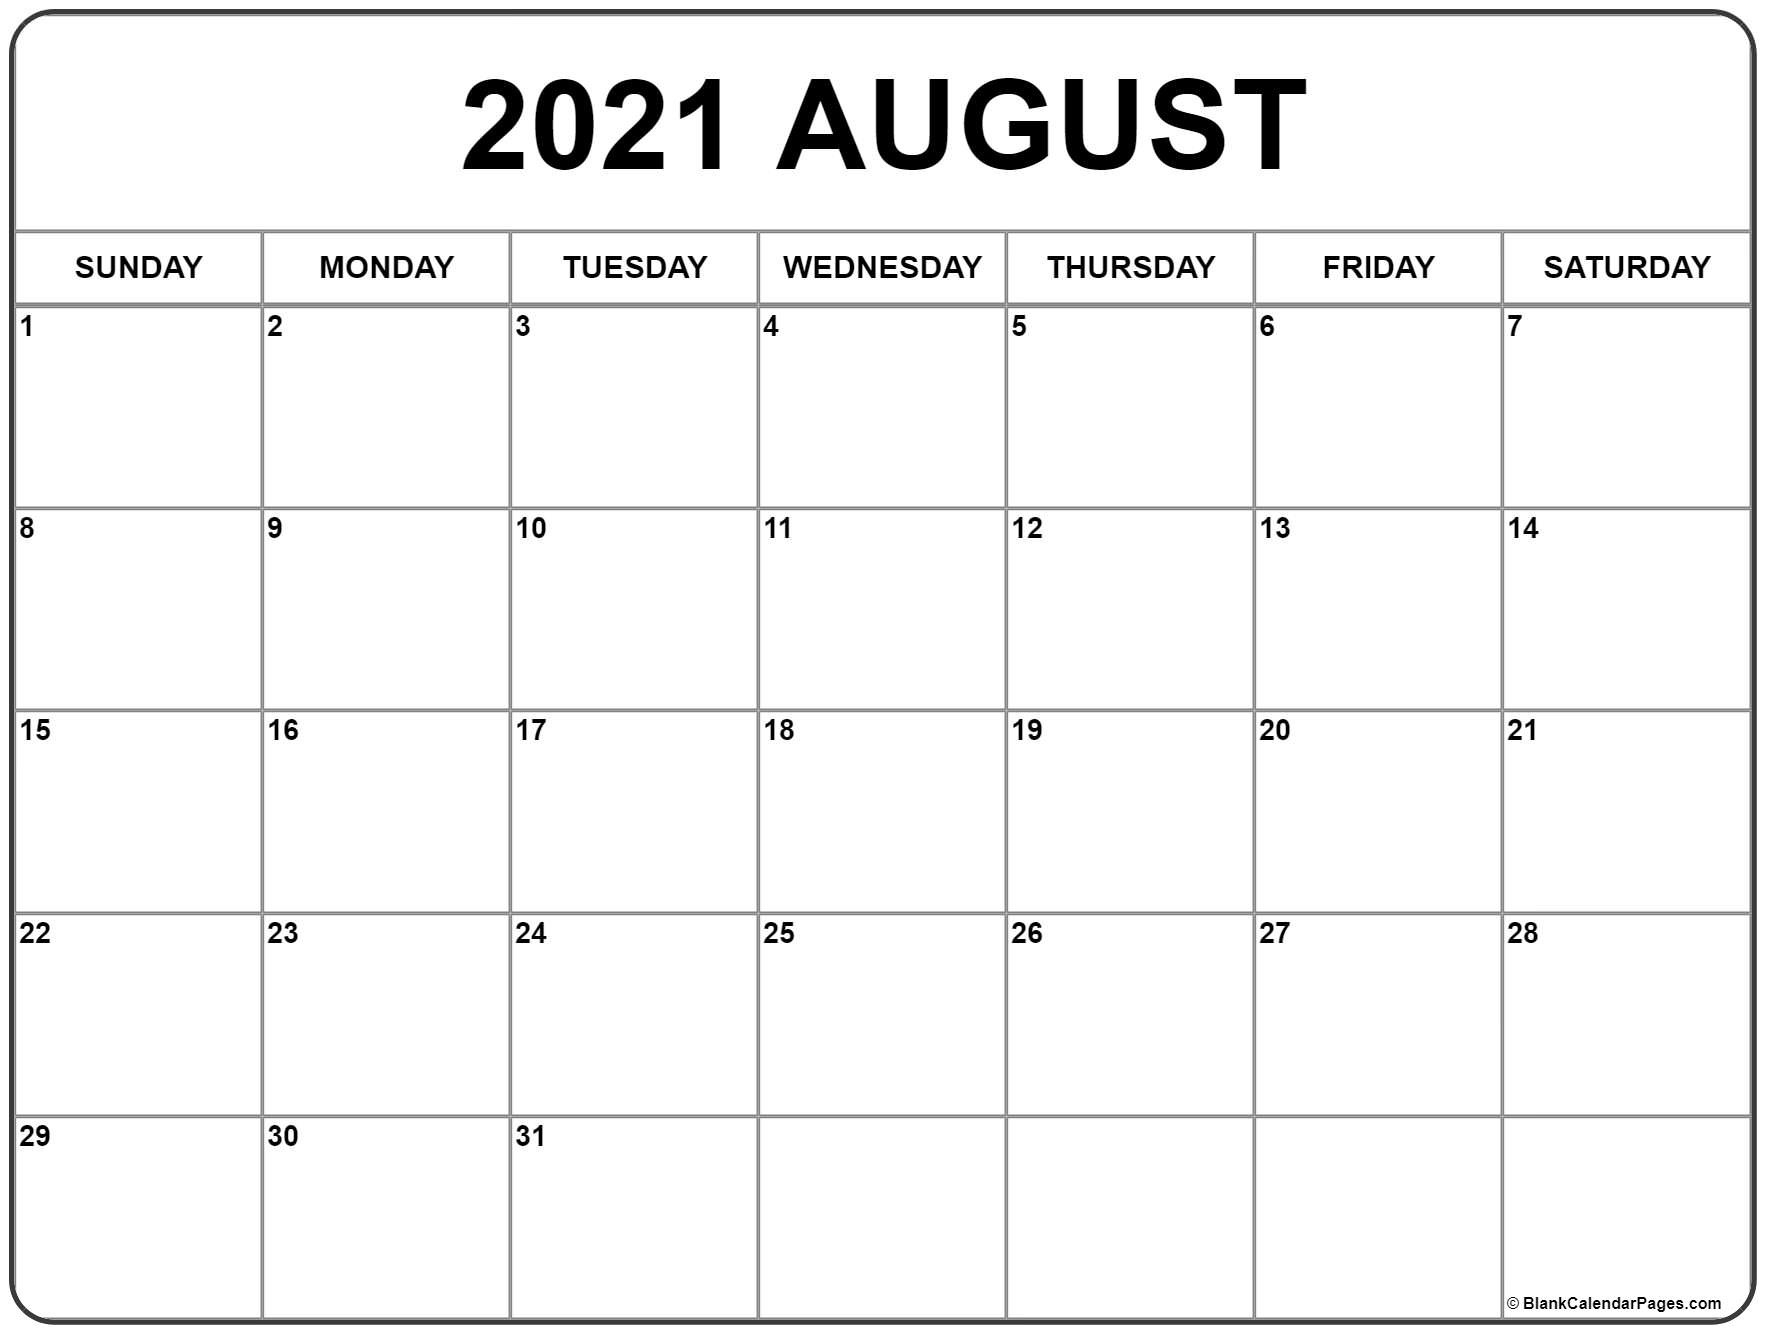 August 2021 Calendar | Free Printable Monthly Calendars  Calendar 2021 August To December